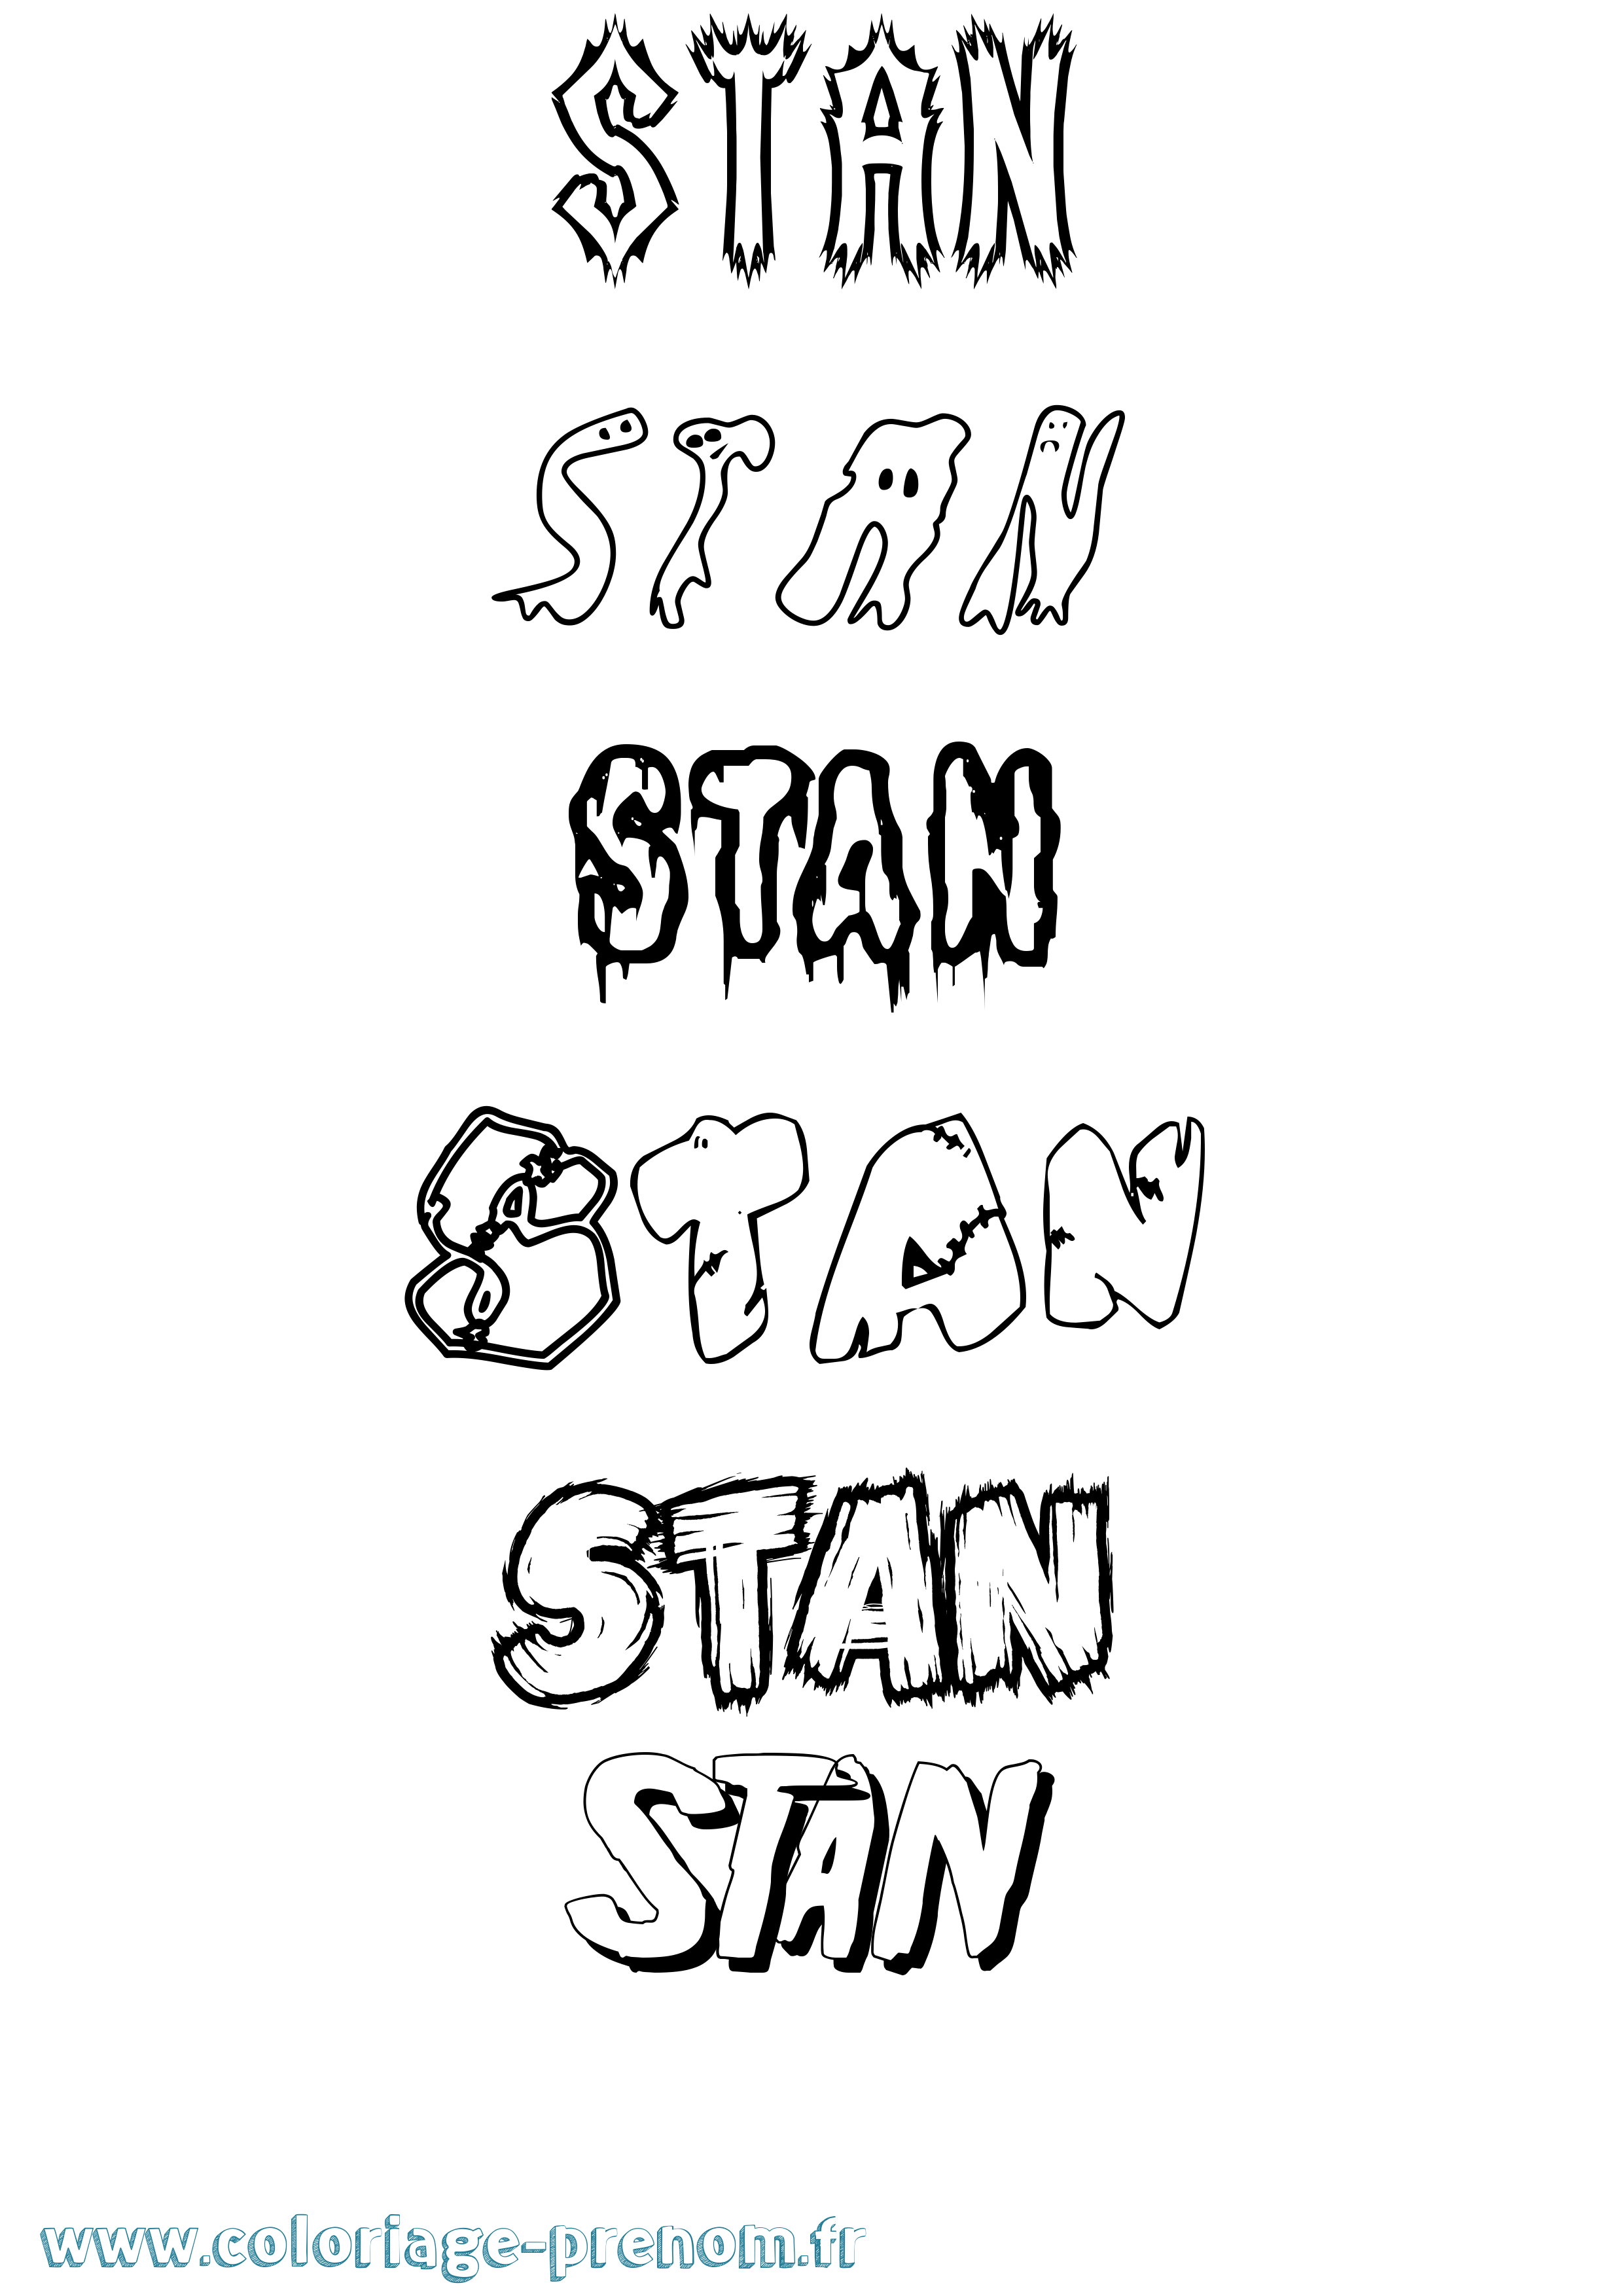 Coloriage prénom Stan